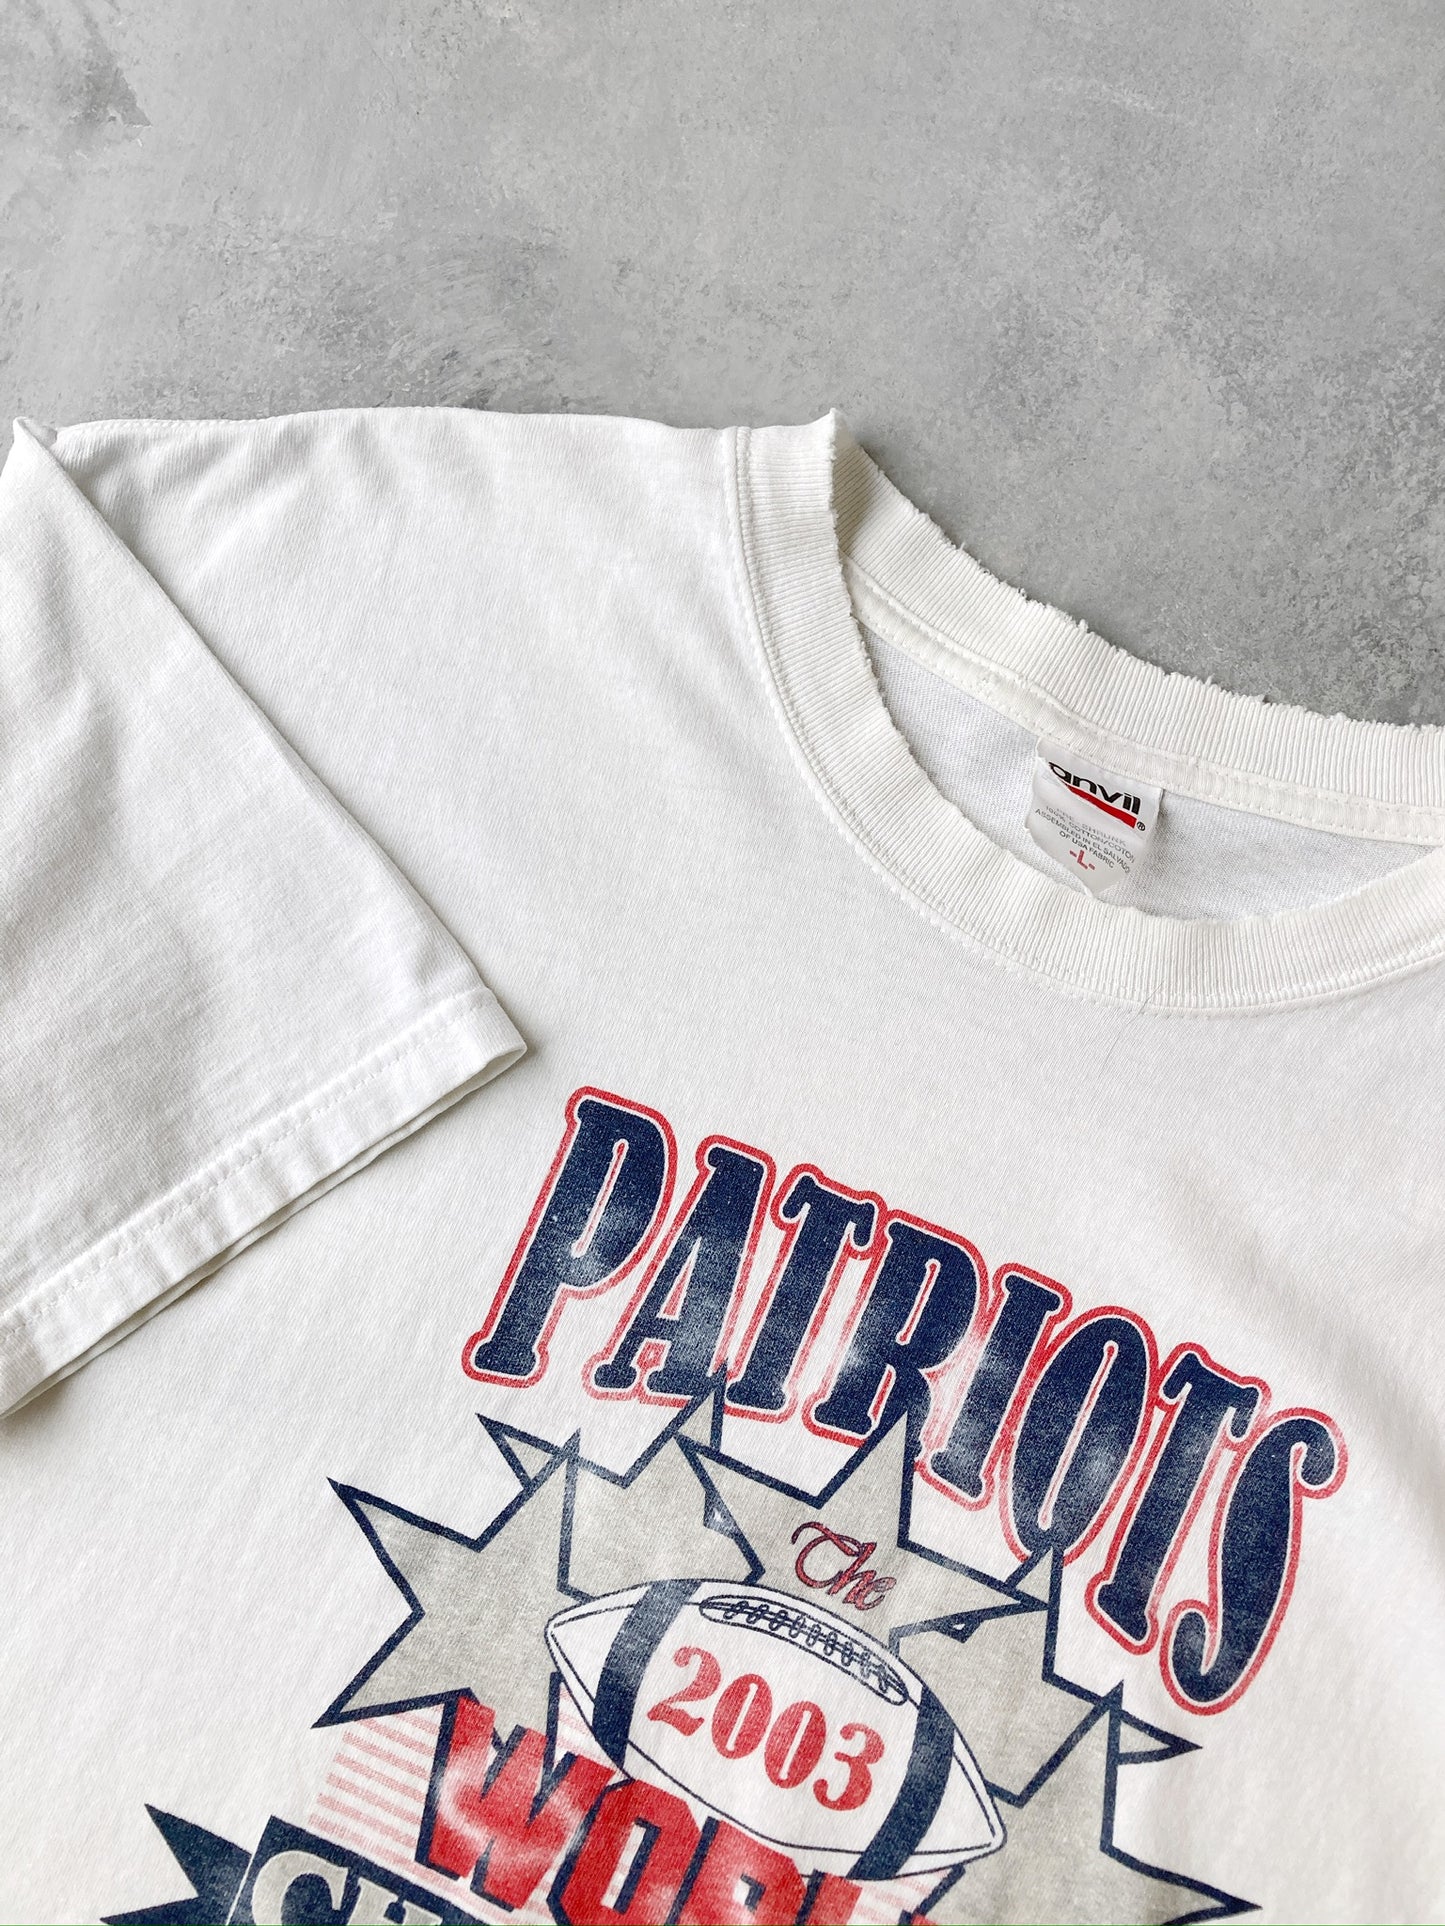 New England Patriots T-Shirt '03 - Large